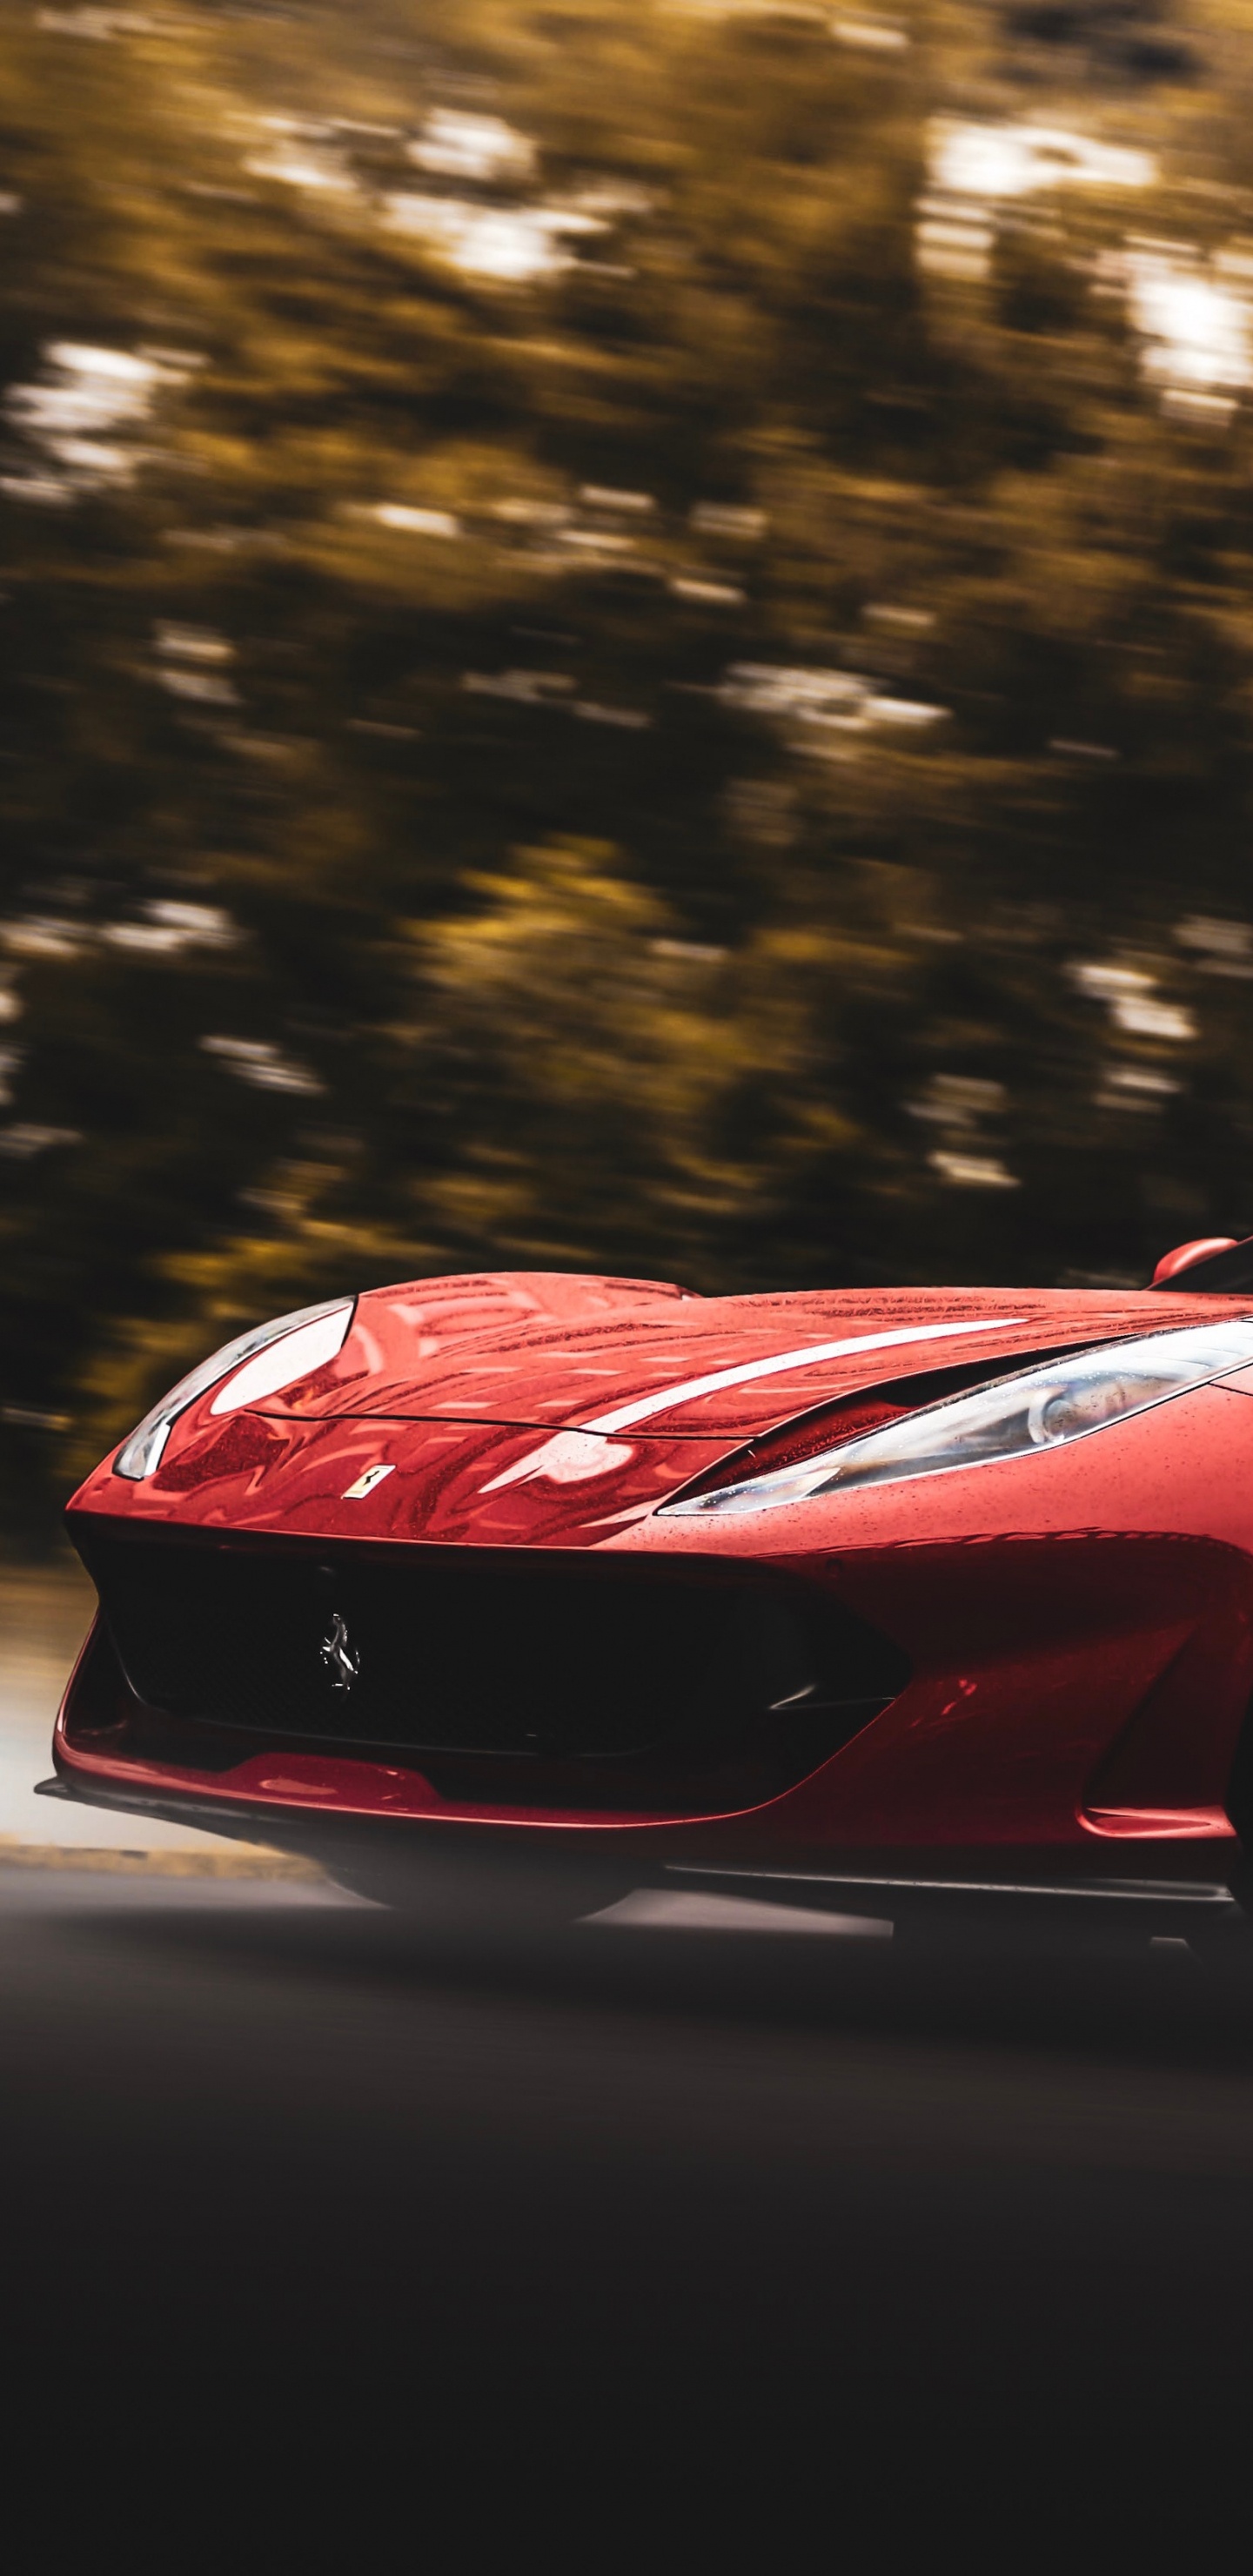 Roter Ferrari 458 Italia Tagsüber Unterwegs. Wallpaper in 1440x2960 Resolution